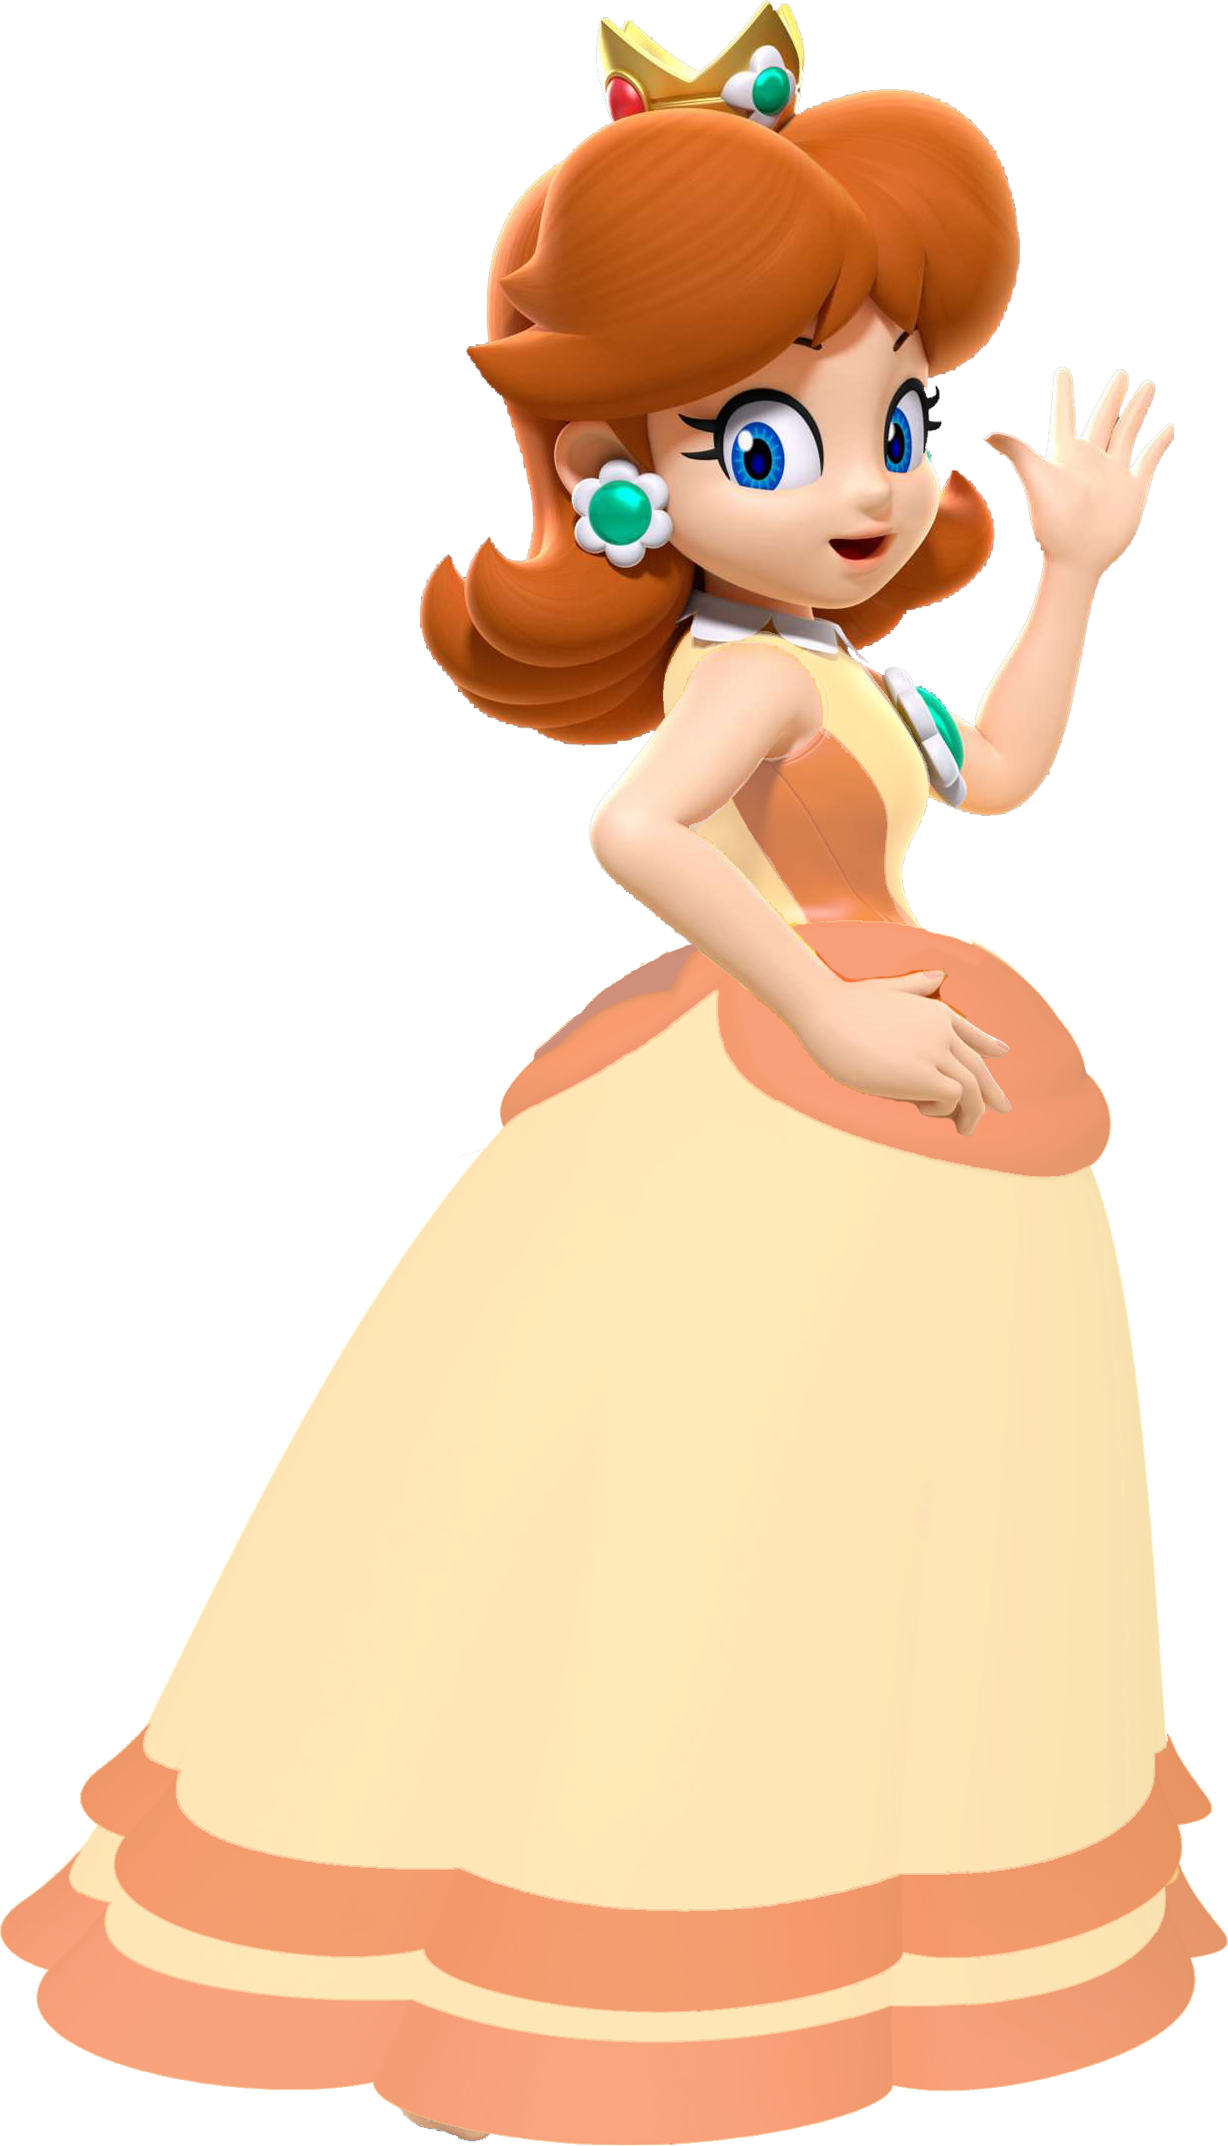 olvidadizo Decrépito Podrido Super Mario Sunshine 2: Princess Daisy by The-Brunette-Amitie on DeviantArt